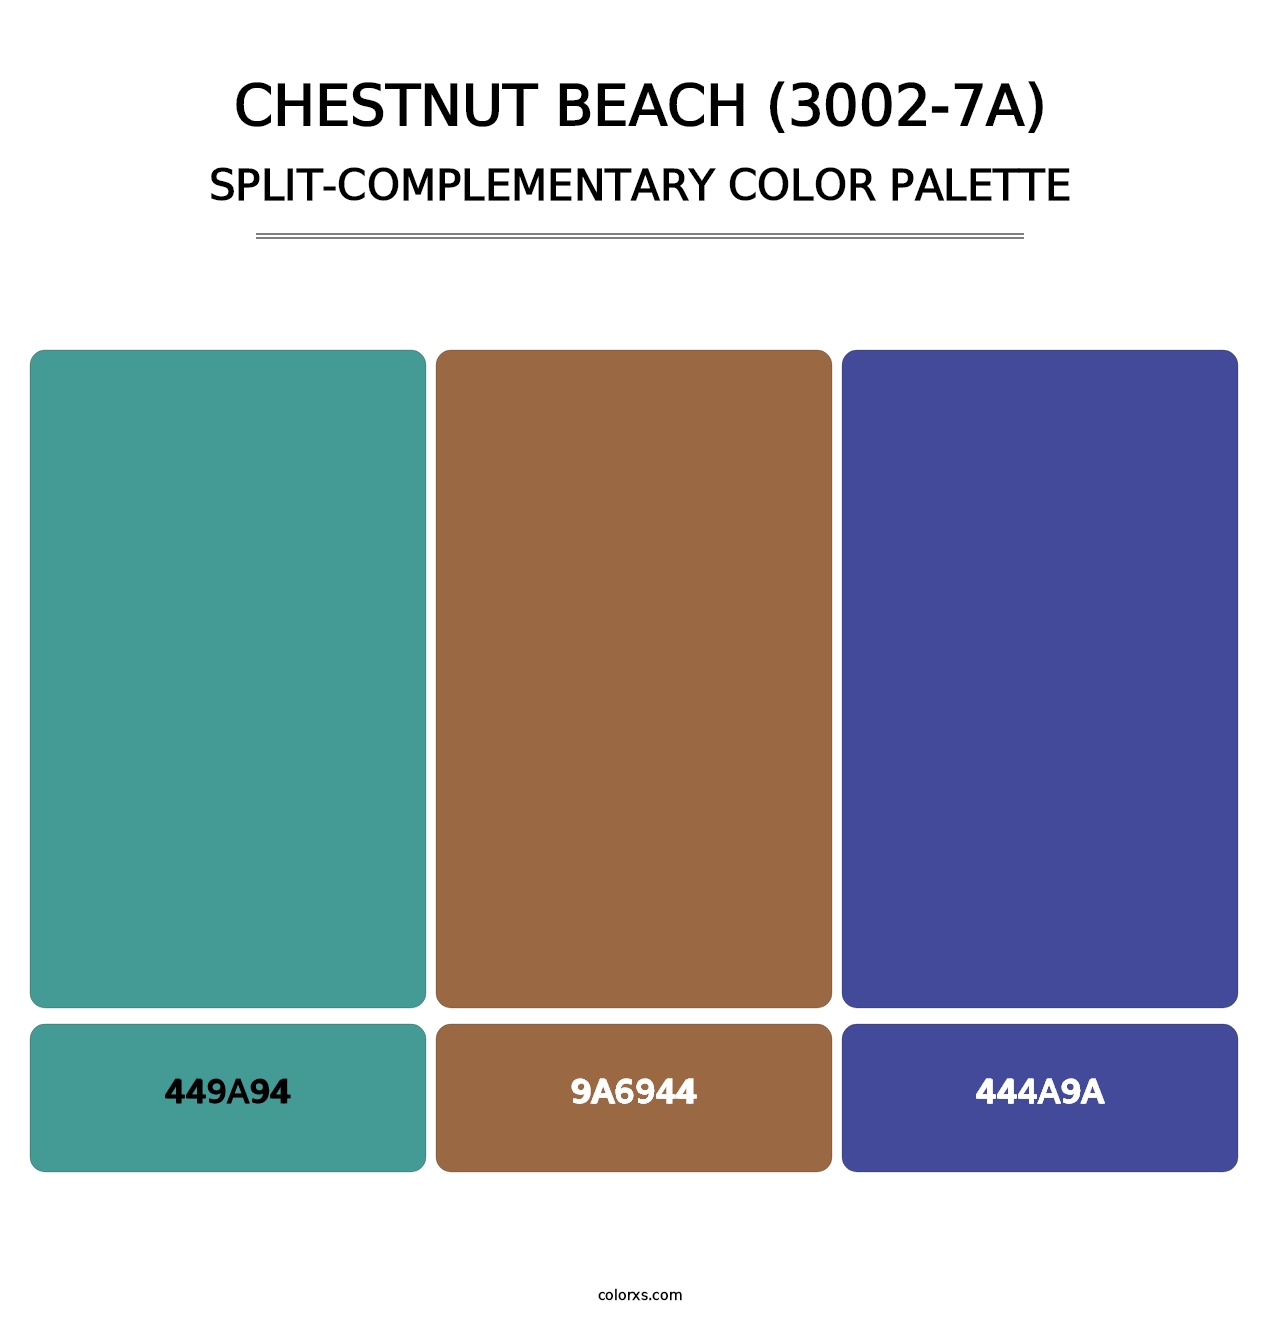 Chestnut Beach (3002-7A) - Split-Complementary Color Palette